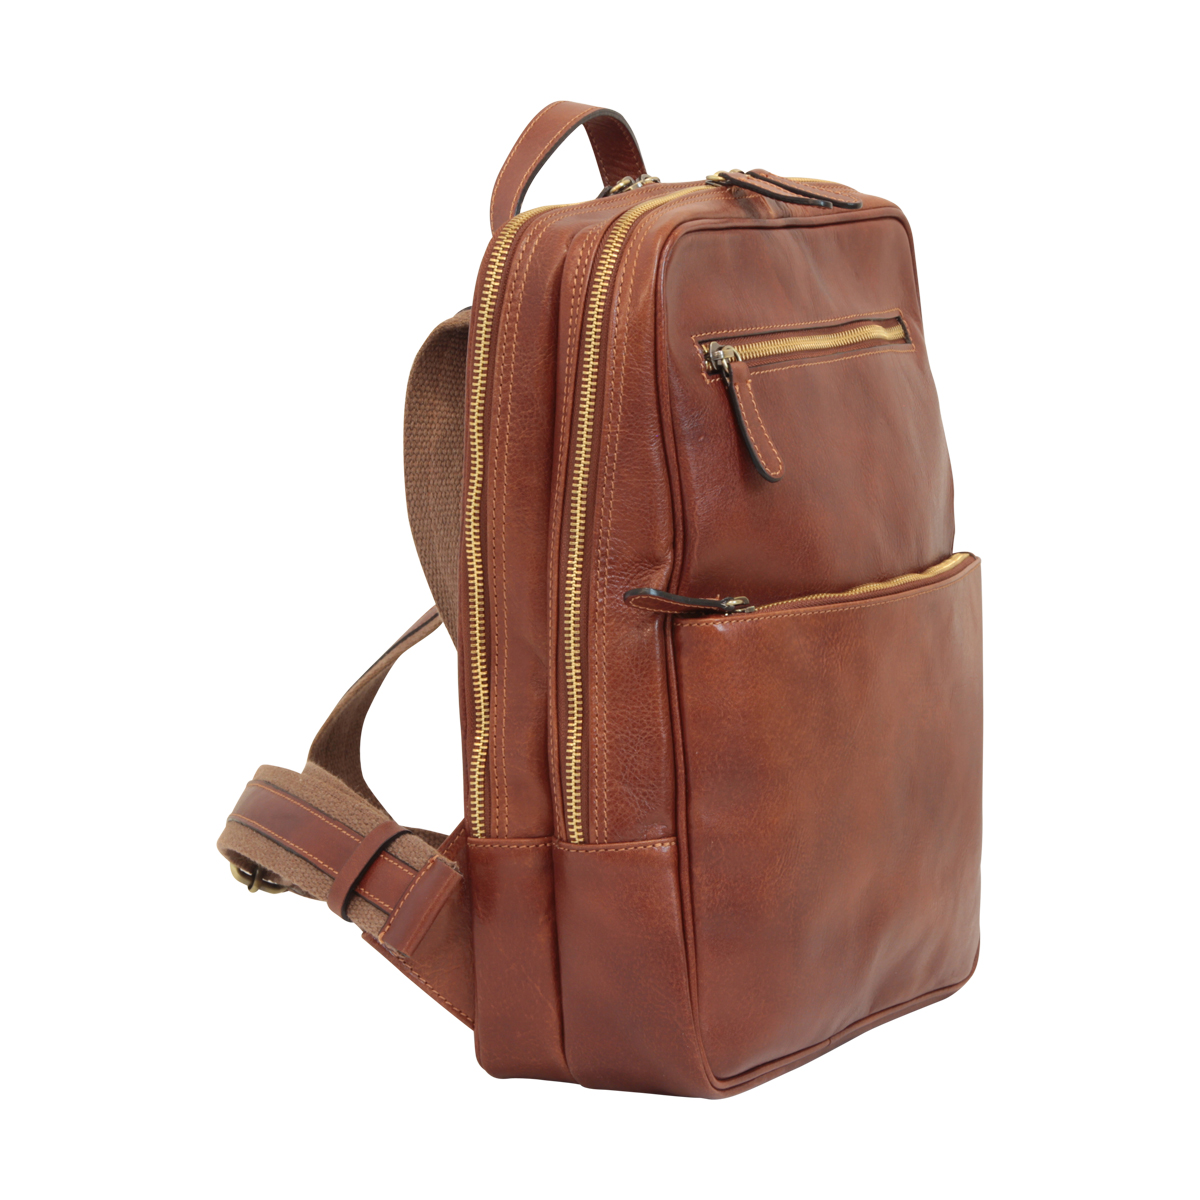 Leather backpack  413589MA | 413589MA UK | Old Angler Firenze